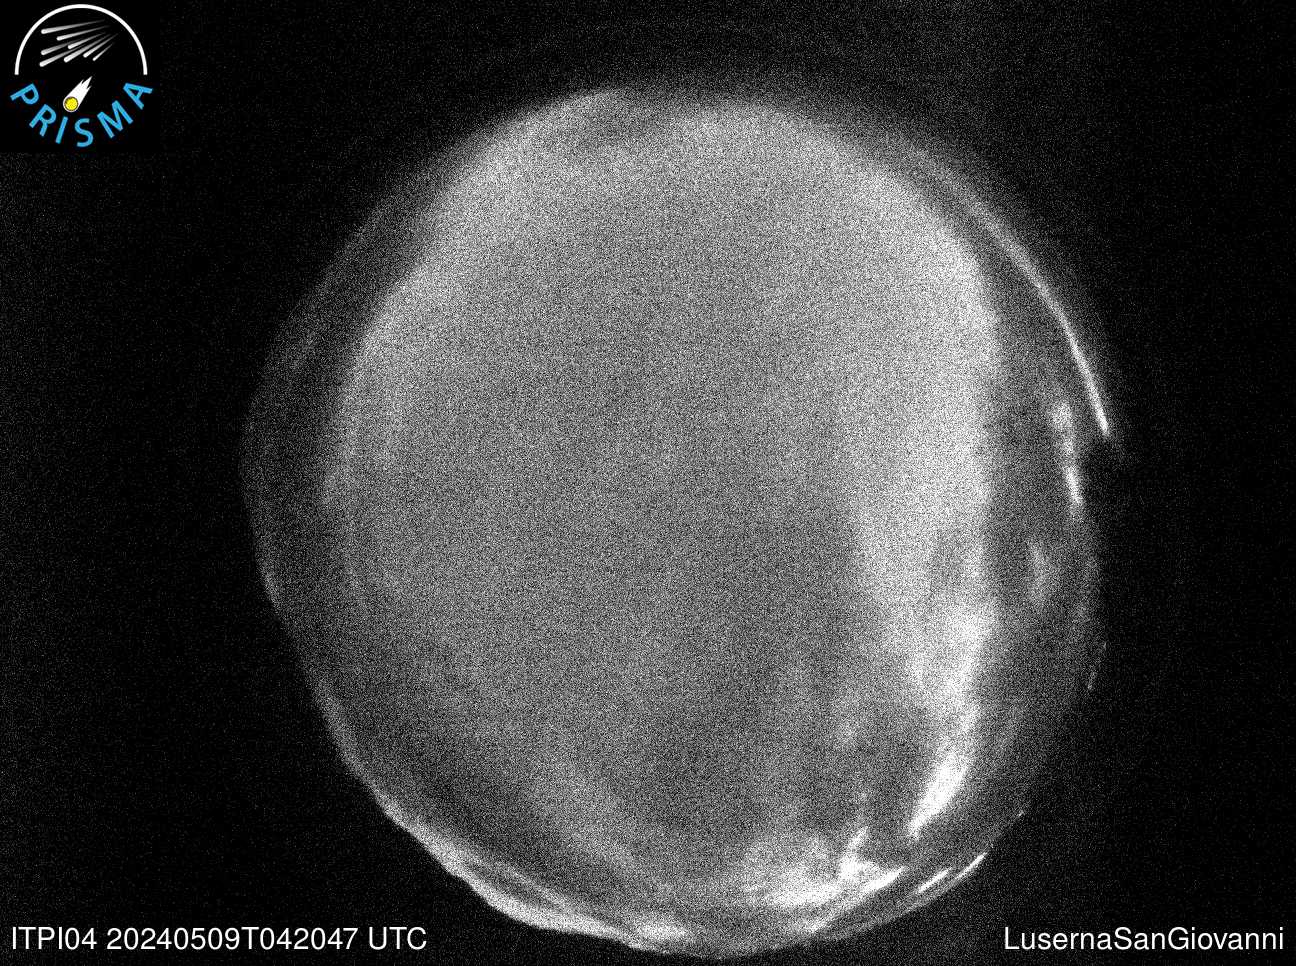 Full size image detection Luserna San Giovanni (ITPI04) Universal Time